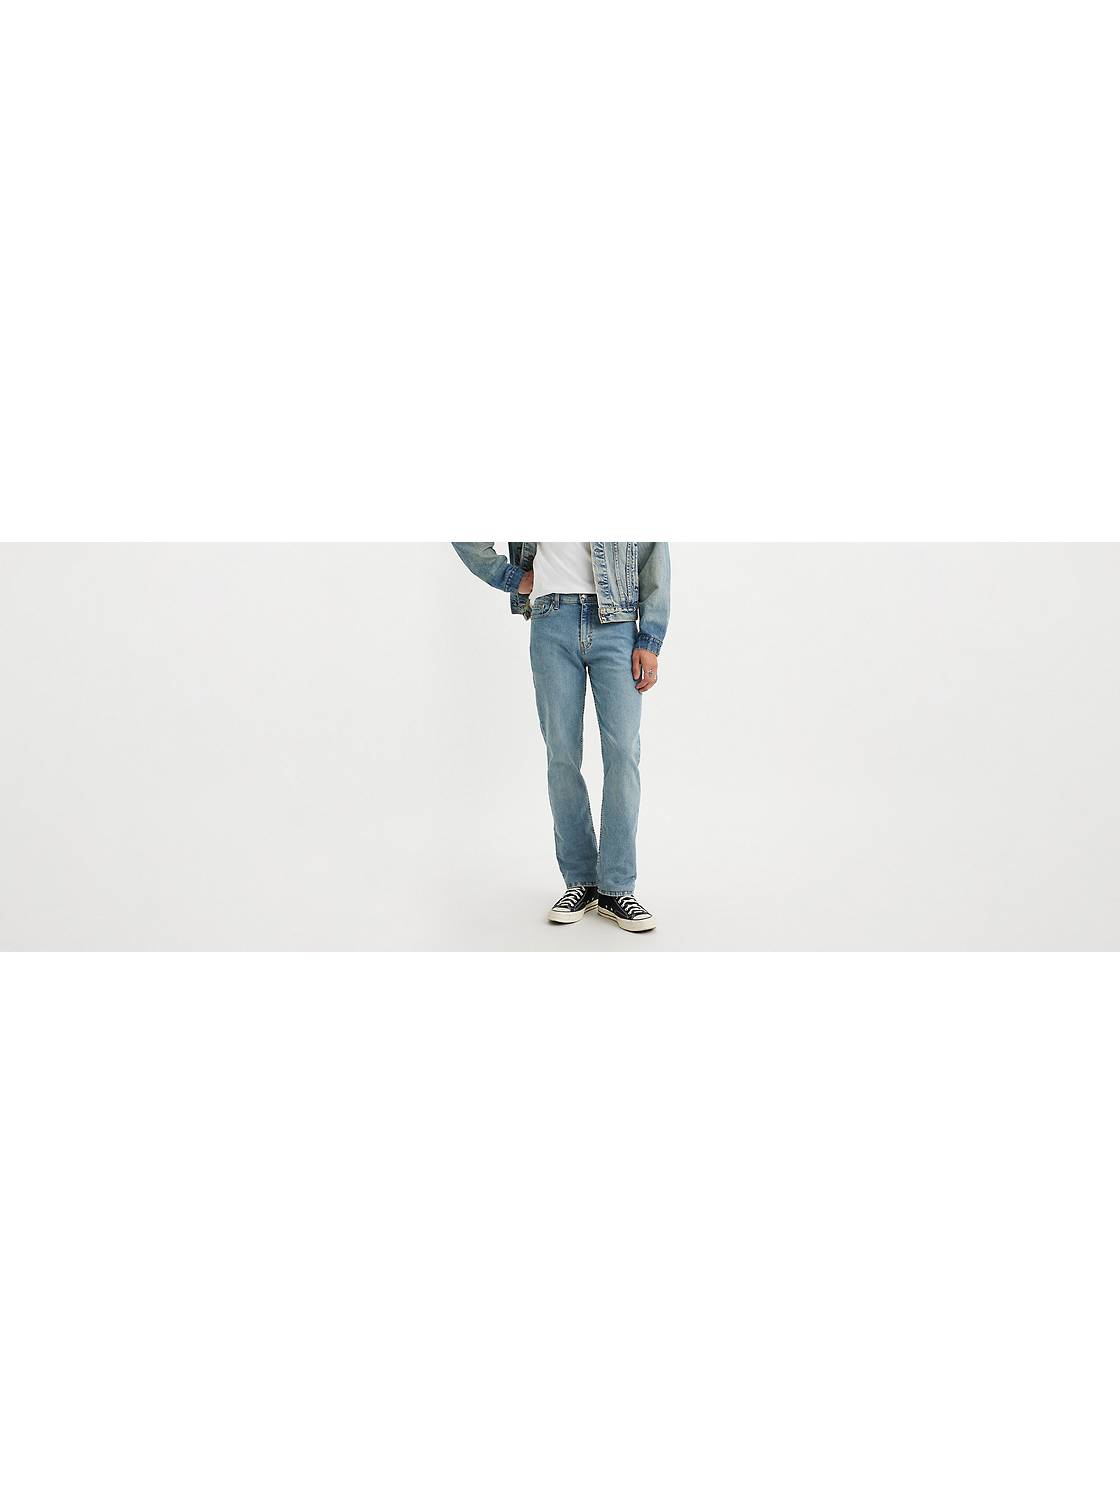 George Clothing Men's Slim Fit Jeans (Dark, 29x30) at  Men's